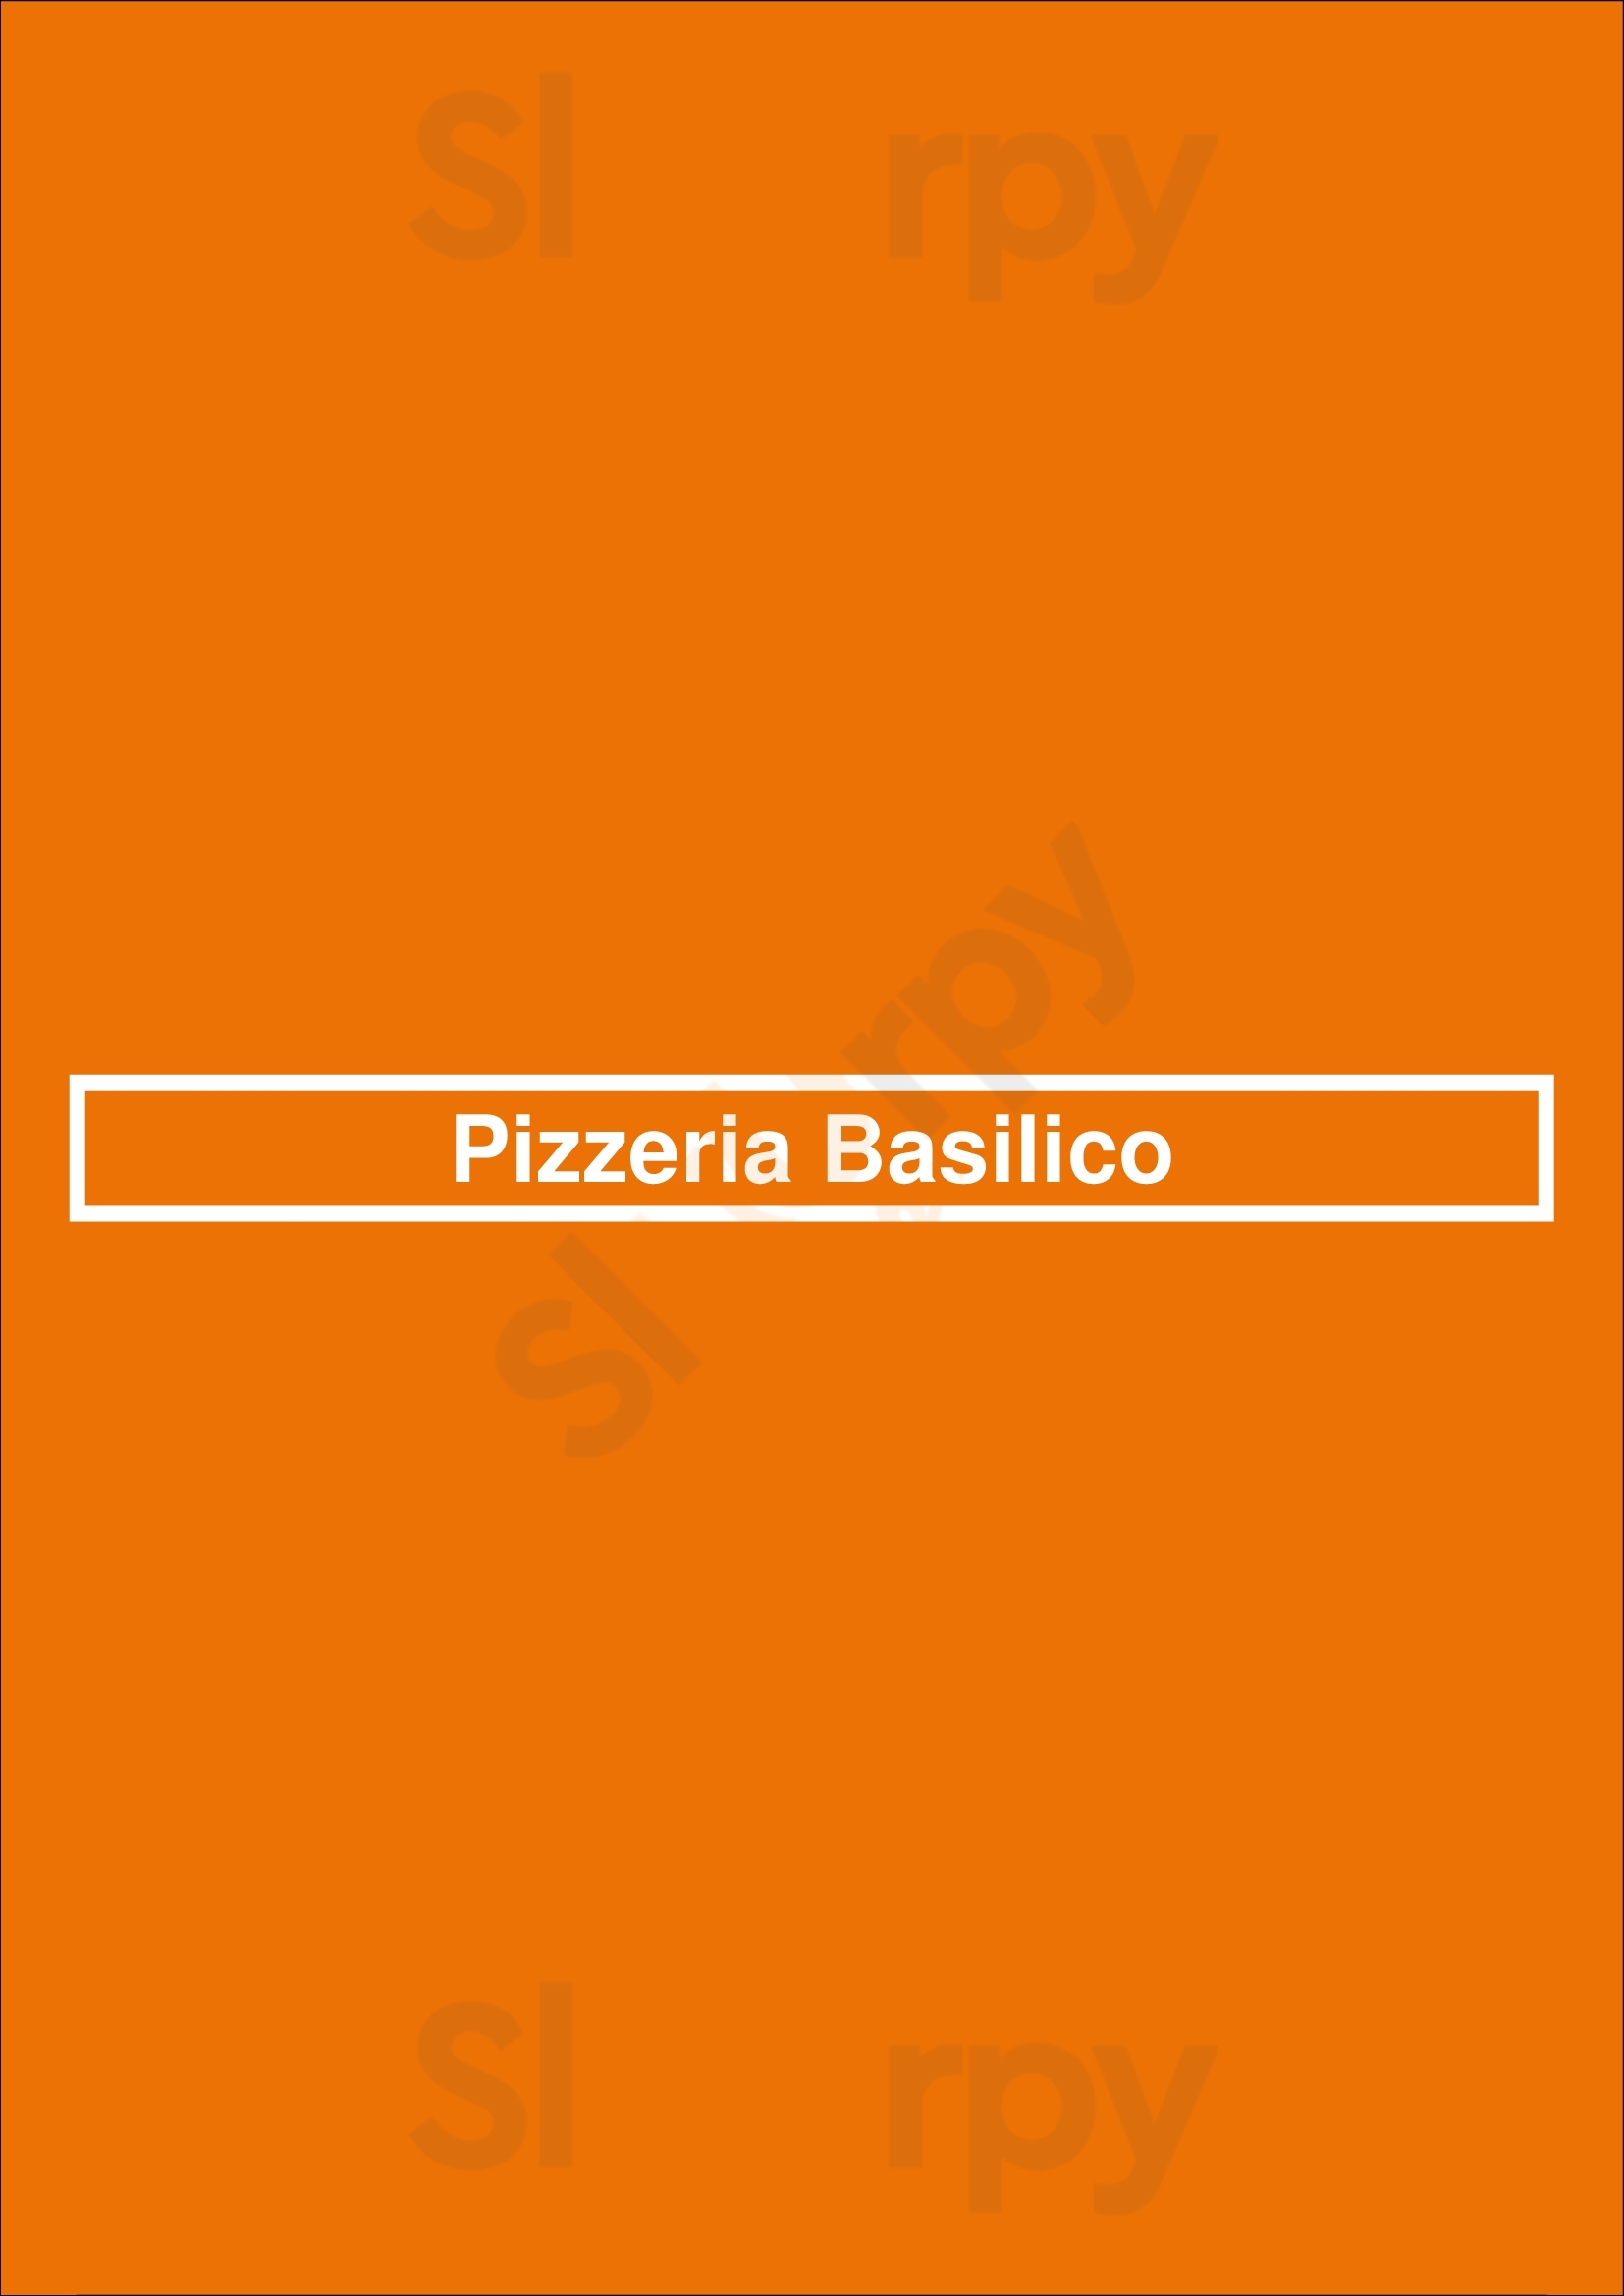 Pizzeria Basilico Bruxelles Menu - 1